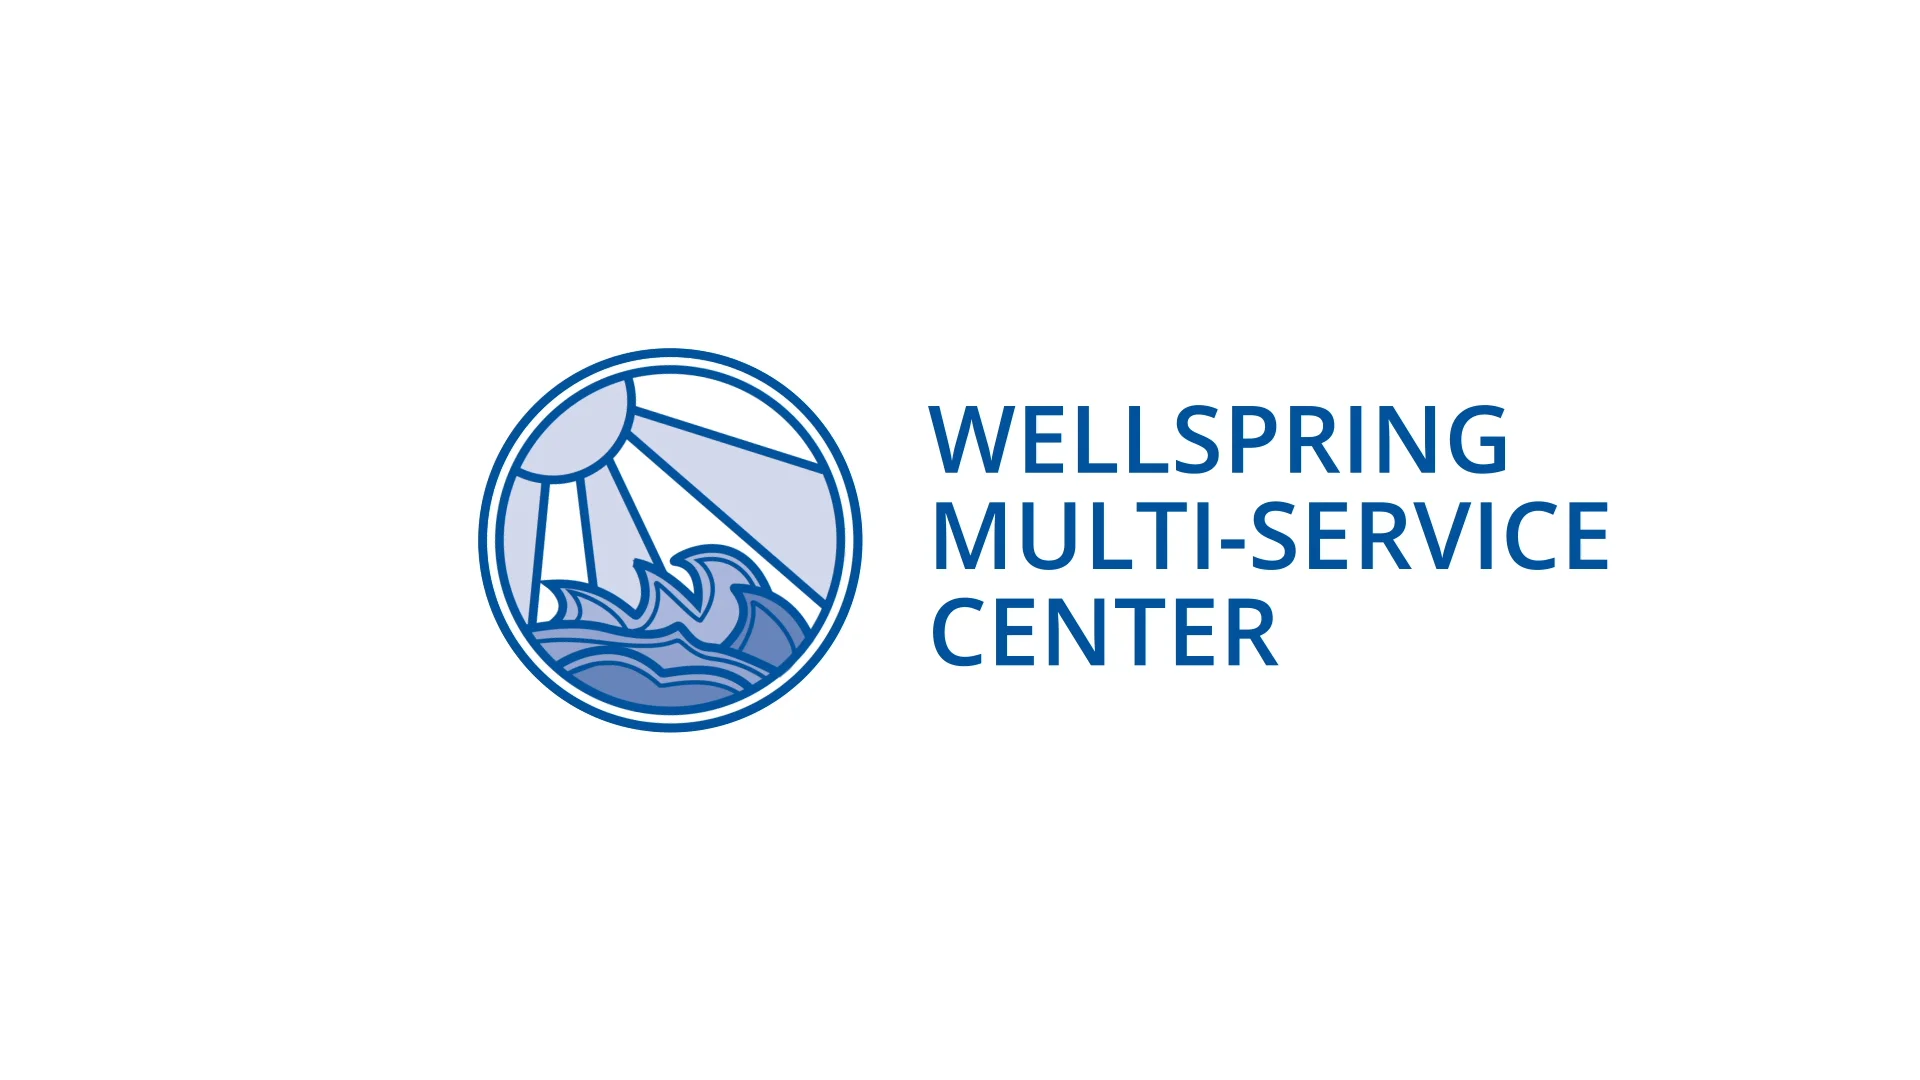 Wellspring Multi-Service Centers